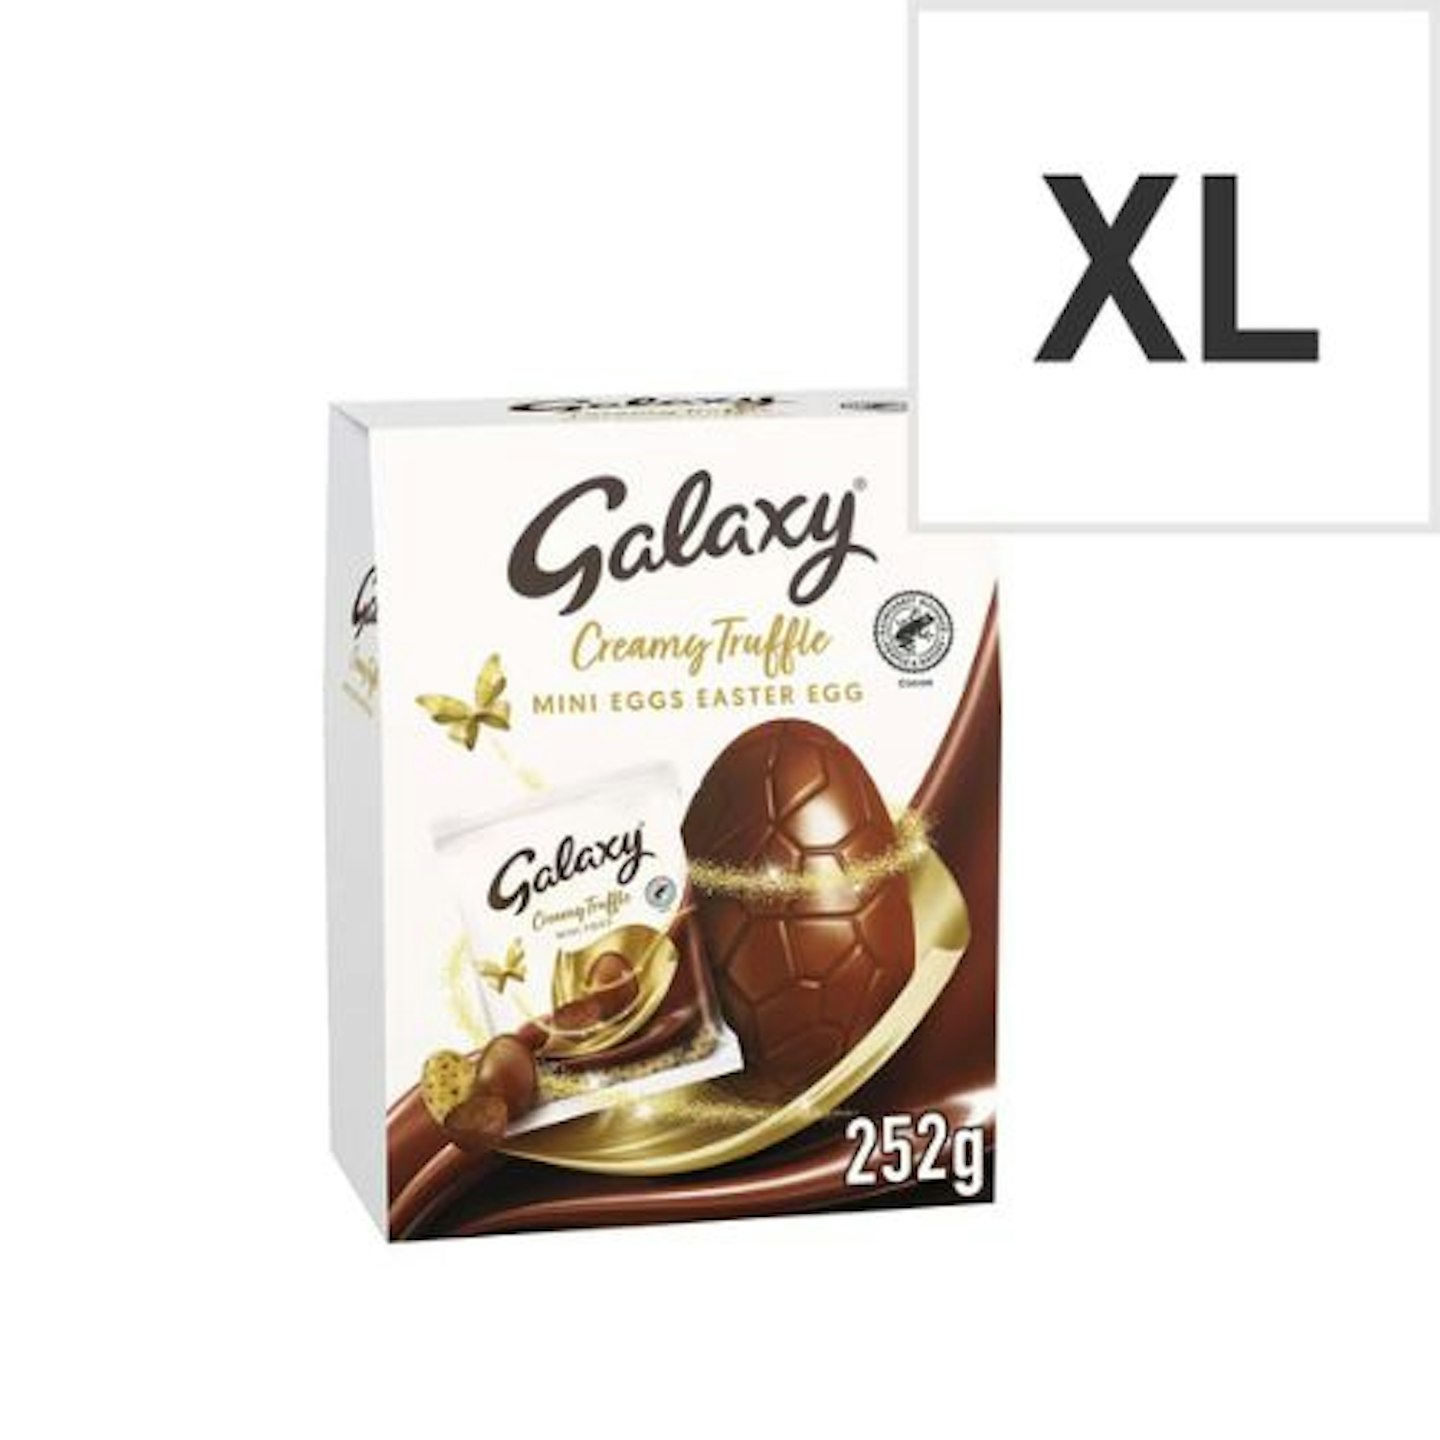 Galaxy Milk Chocolate Creamy Truffle Minis Extra Large Easter Egg